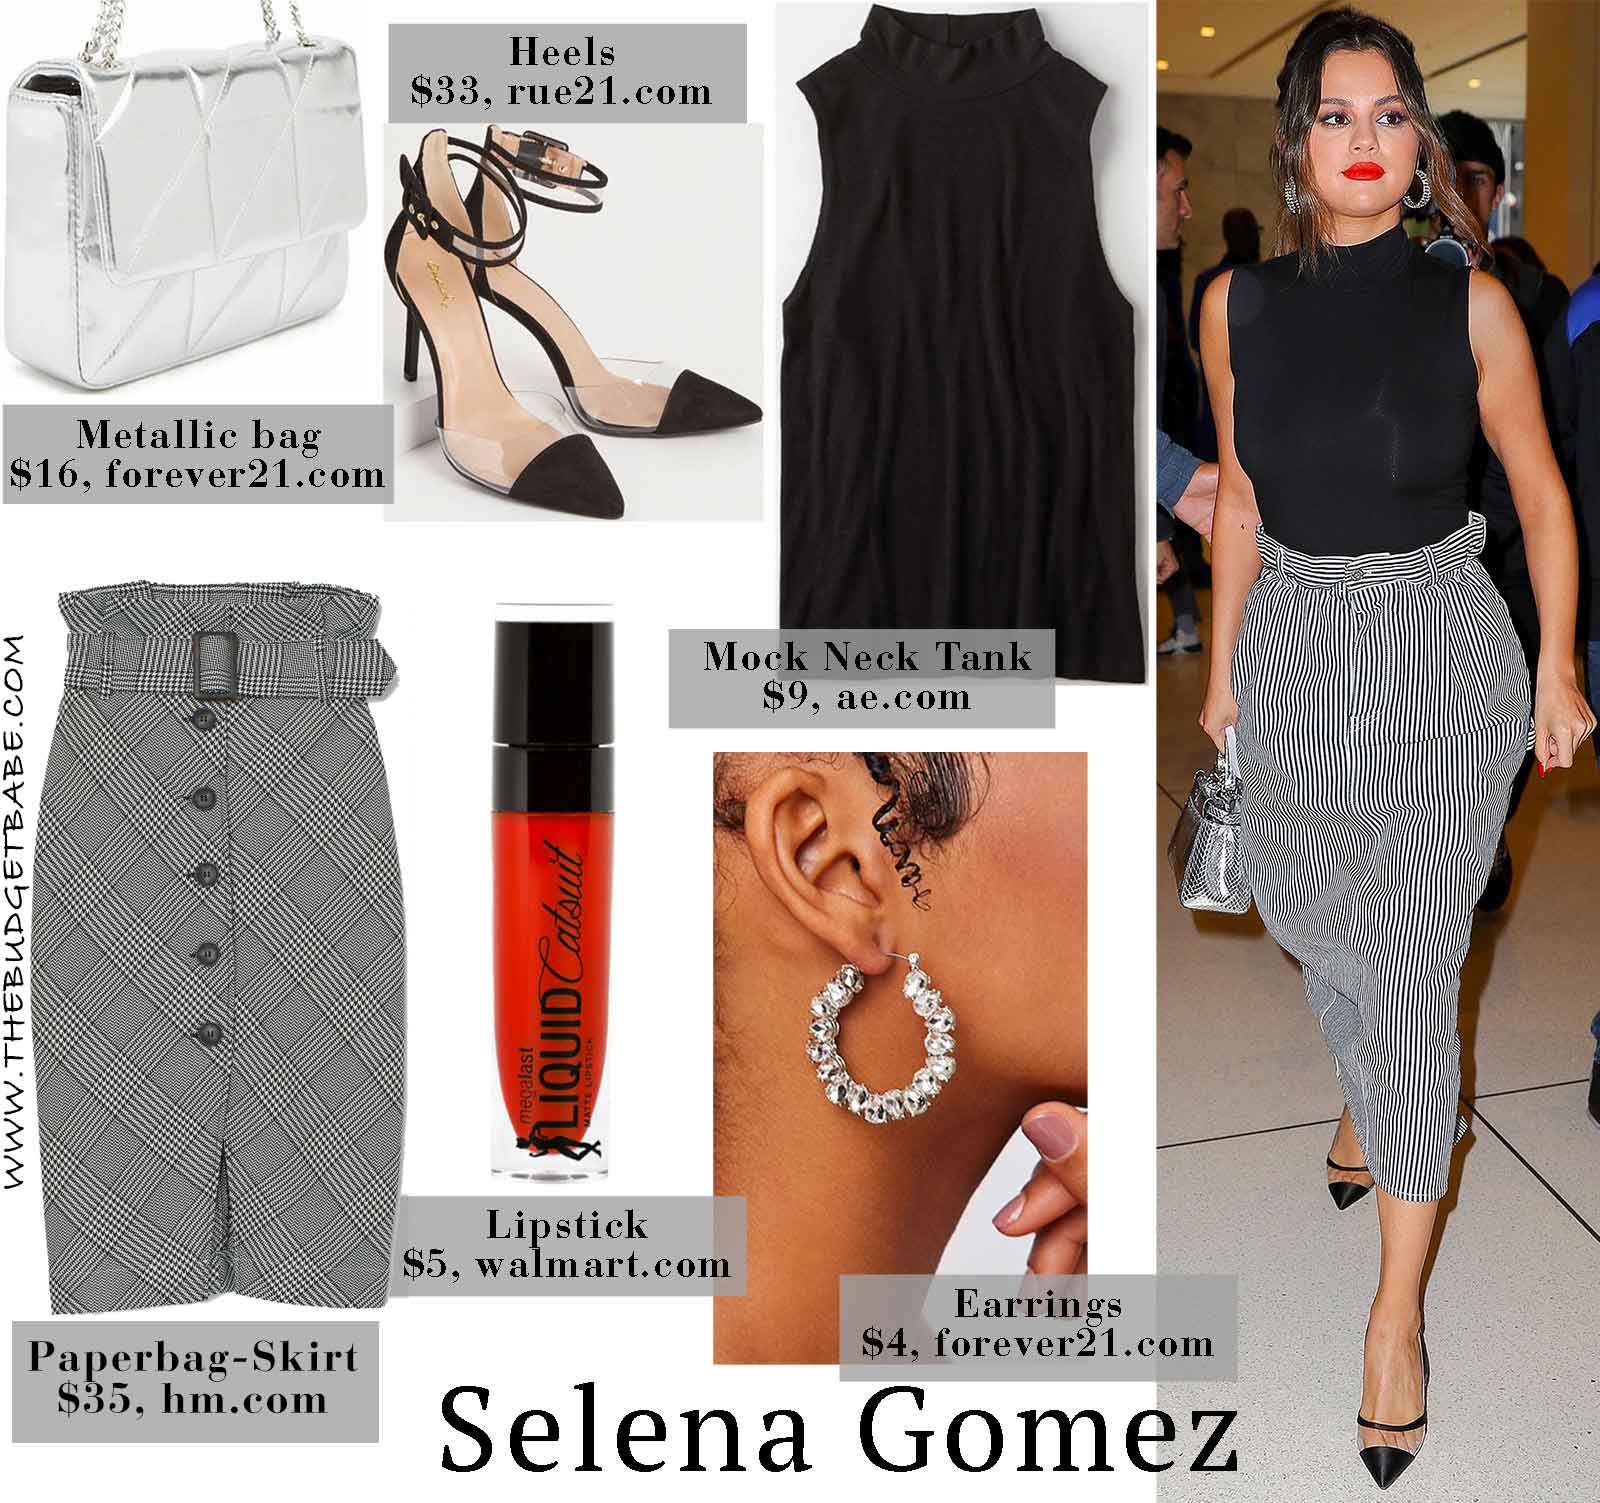 Selena Gomez's Striped Skirt, Black Tank, and Metallic Mini Bag Look for Less